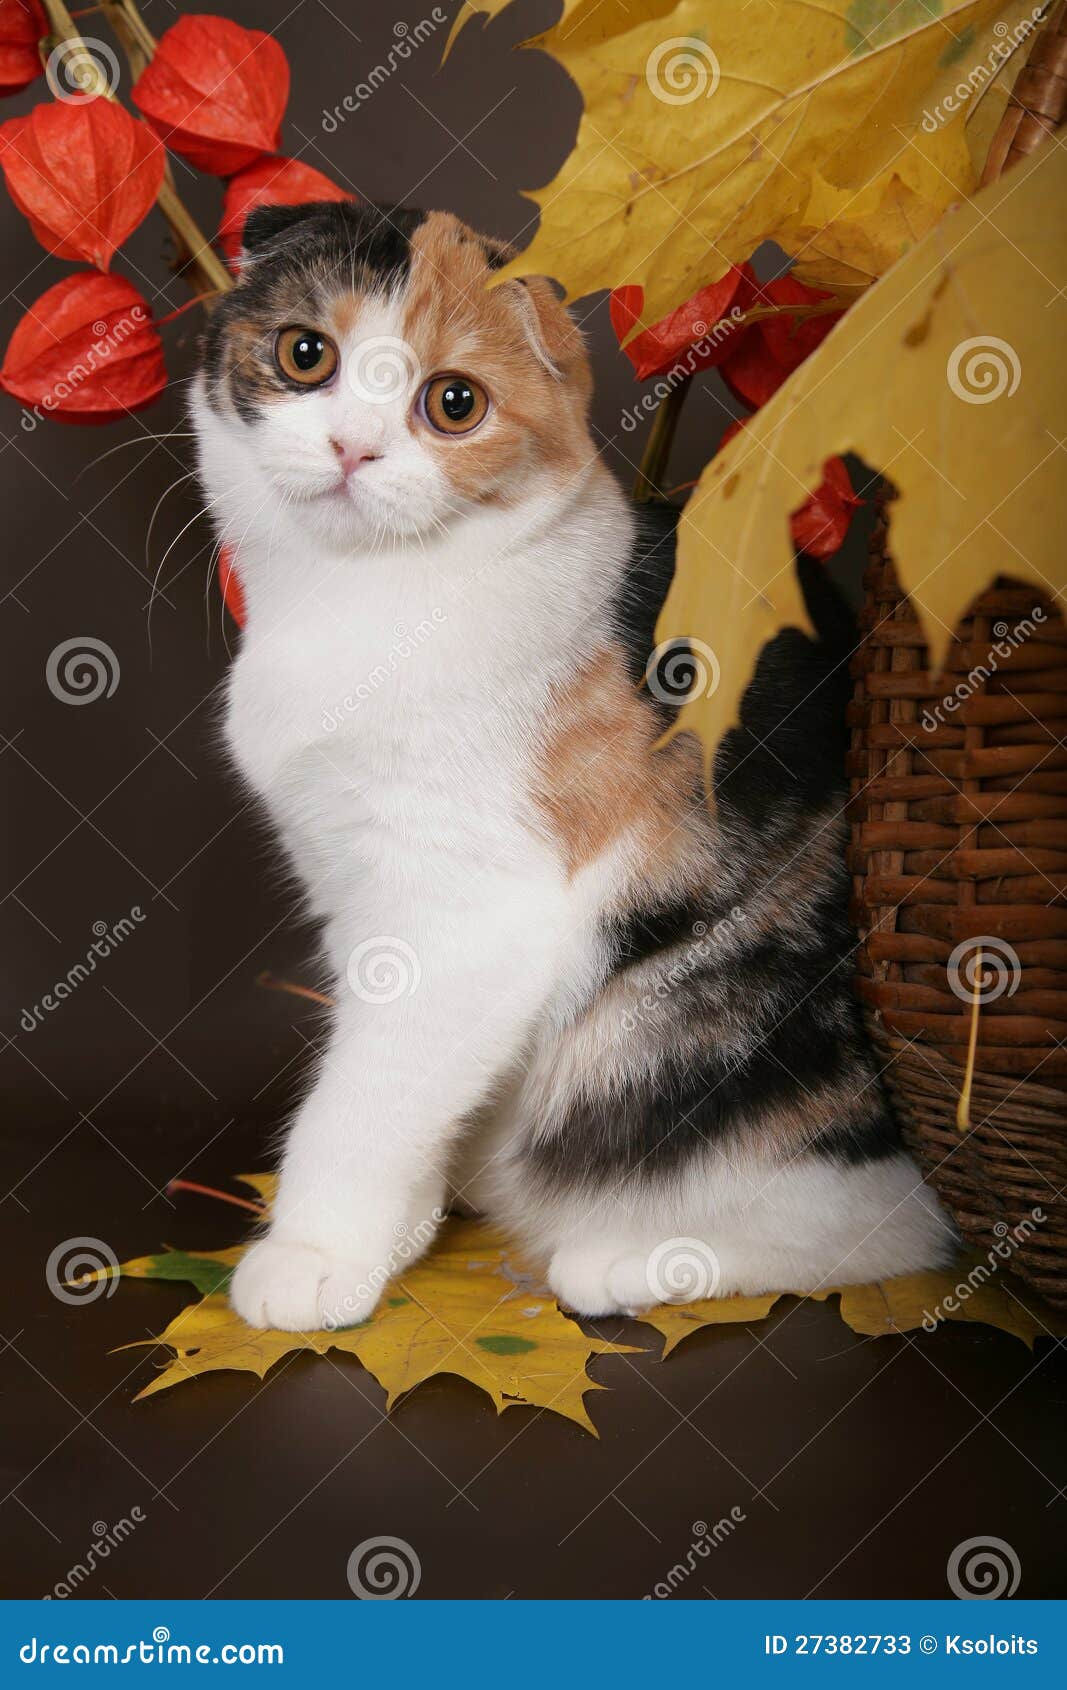 Scottish Fold Cat With Leaves Stock Photos  Image: 27382733